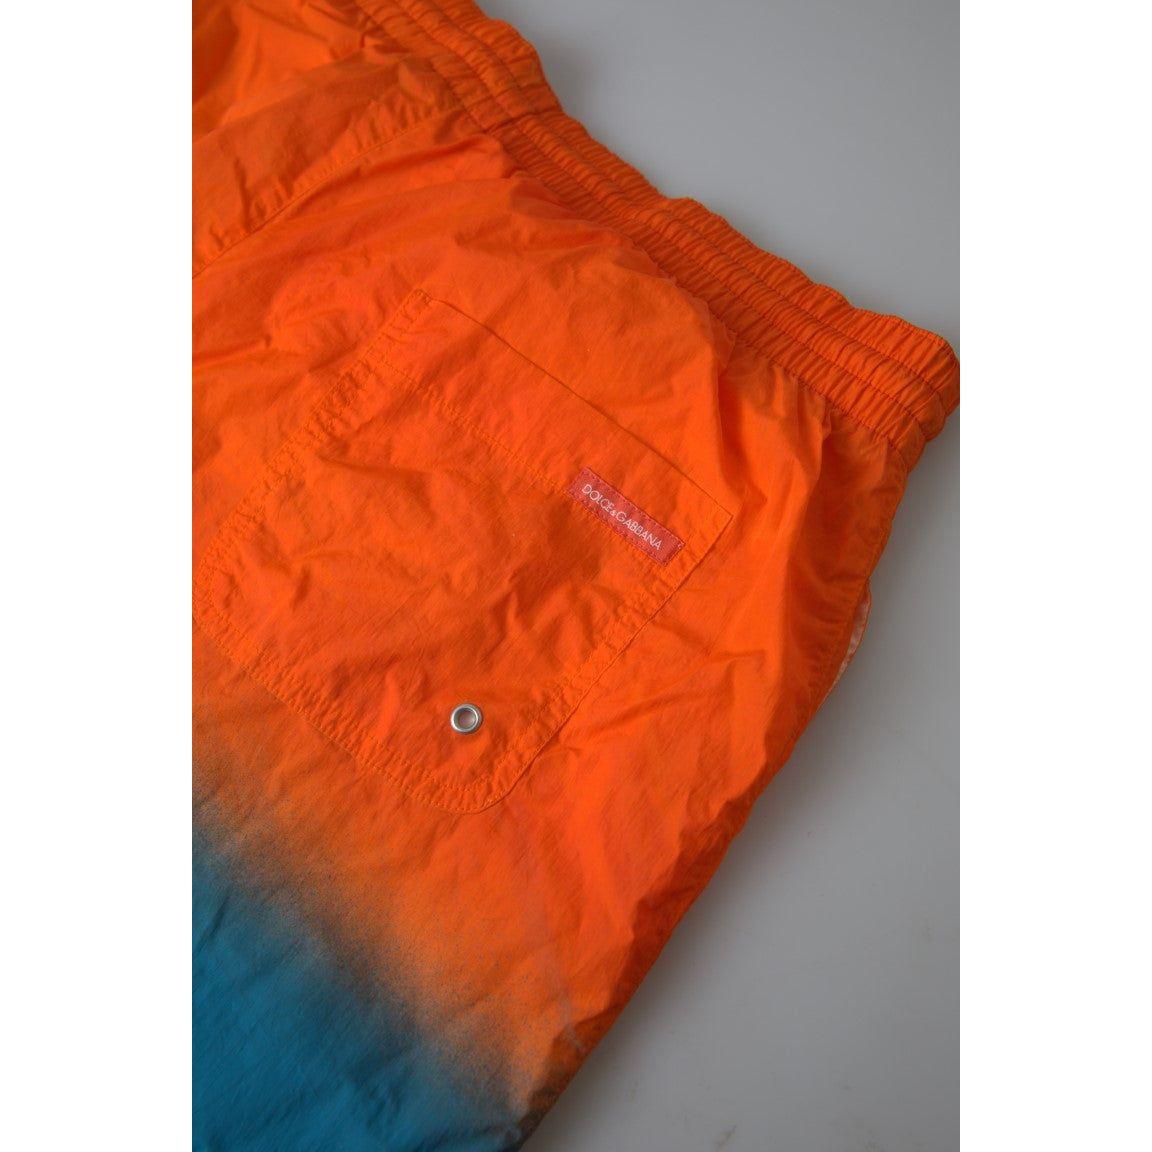 Dolce & Gabbana Gradient Effect Swim Shorts in Vibrant Orange orange-blue-gradient-beachwear-swimwear-shorts 465A2652-Medium-e3a1c325-158.jpg